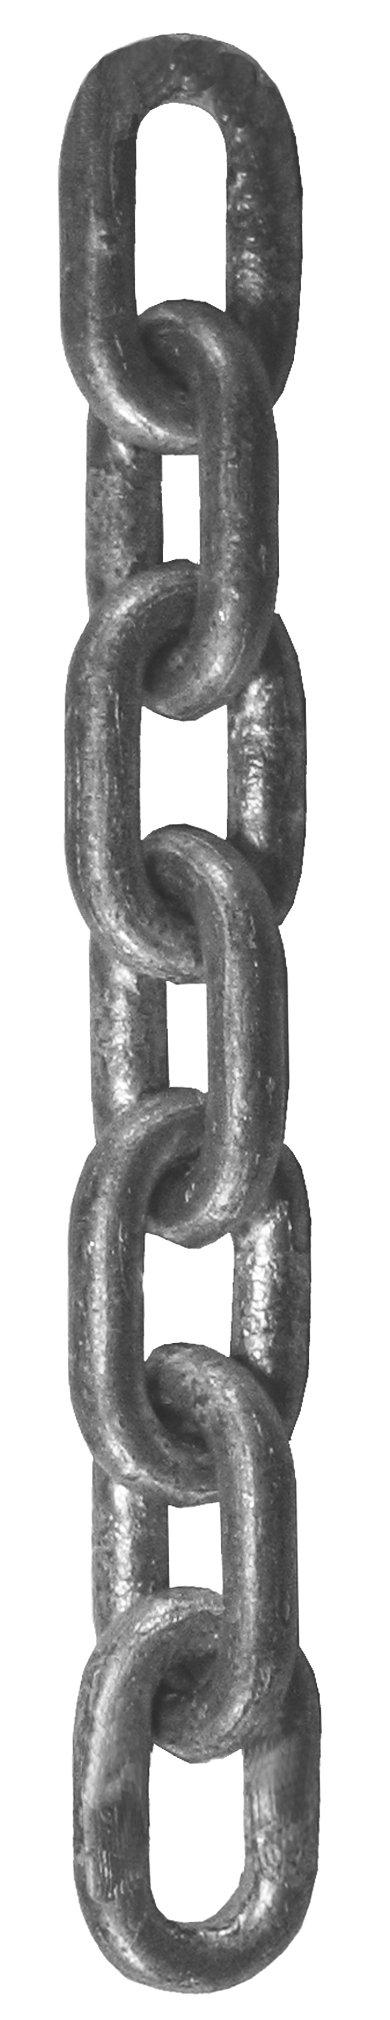 5mm Zinc Plated Steel Short Link Chain 